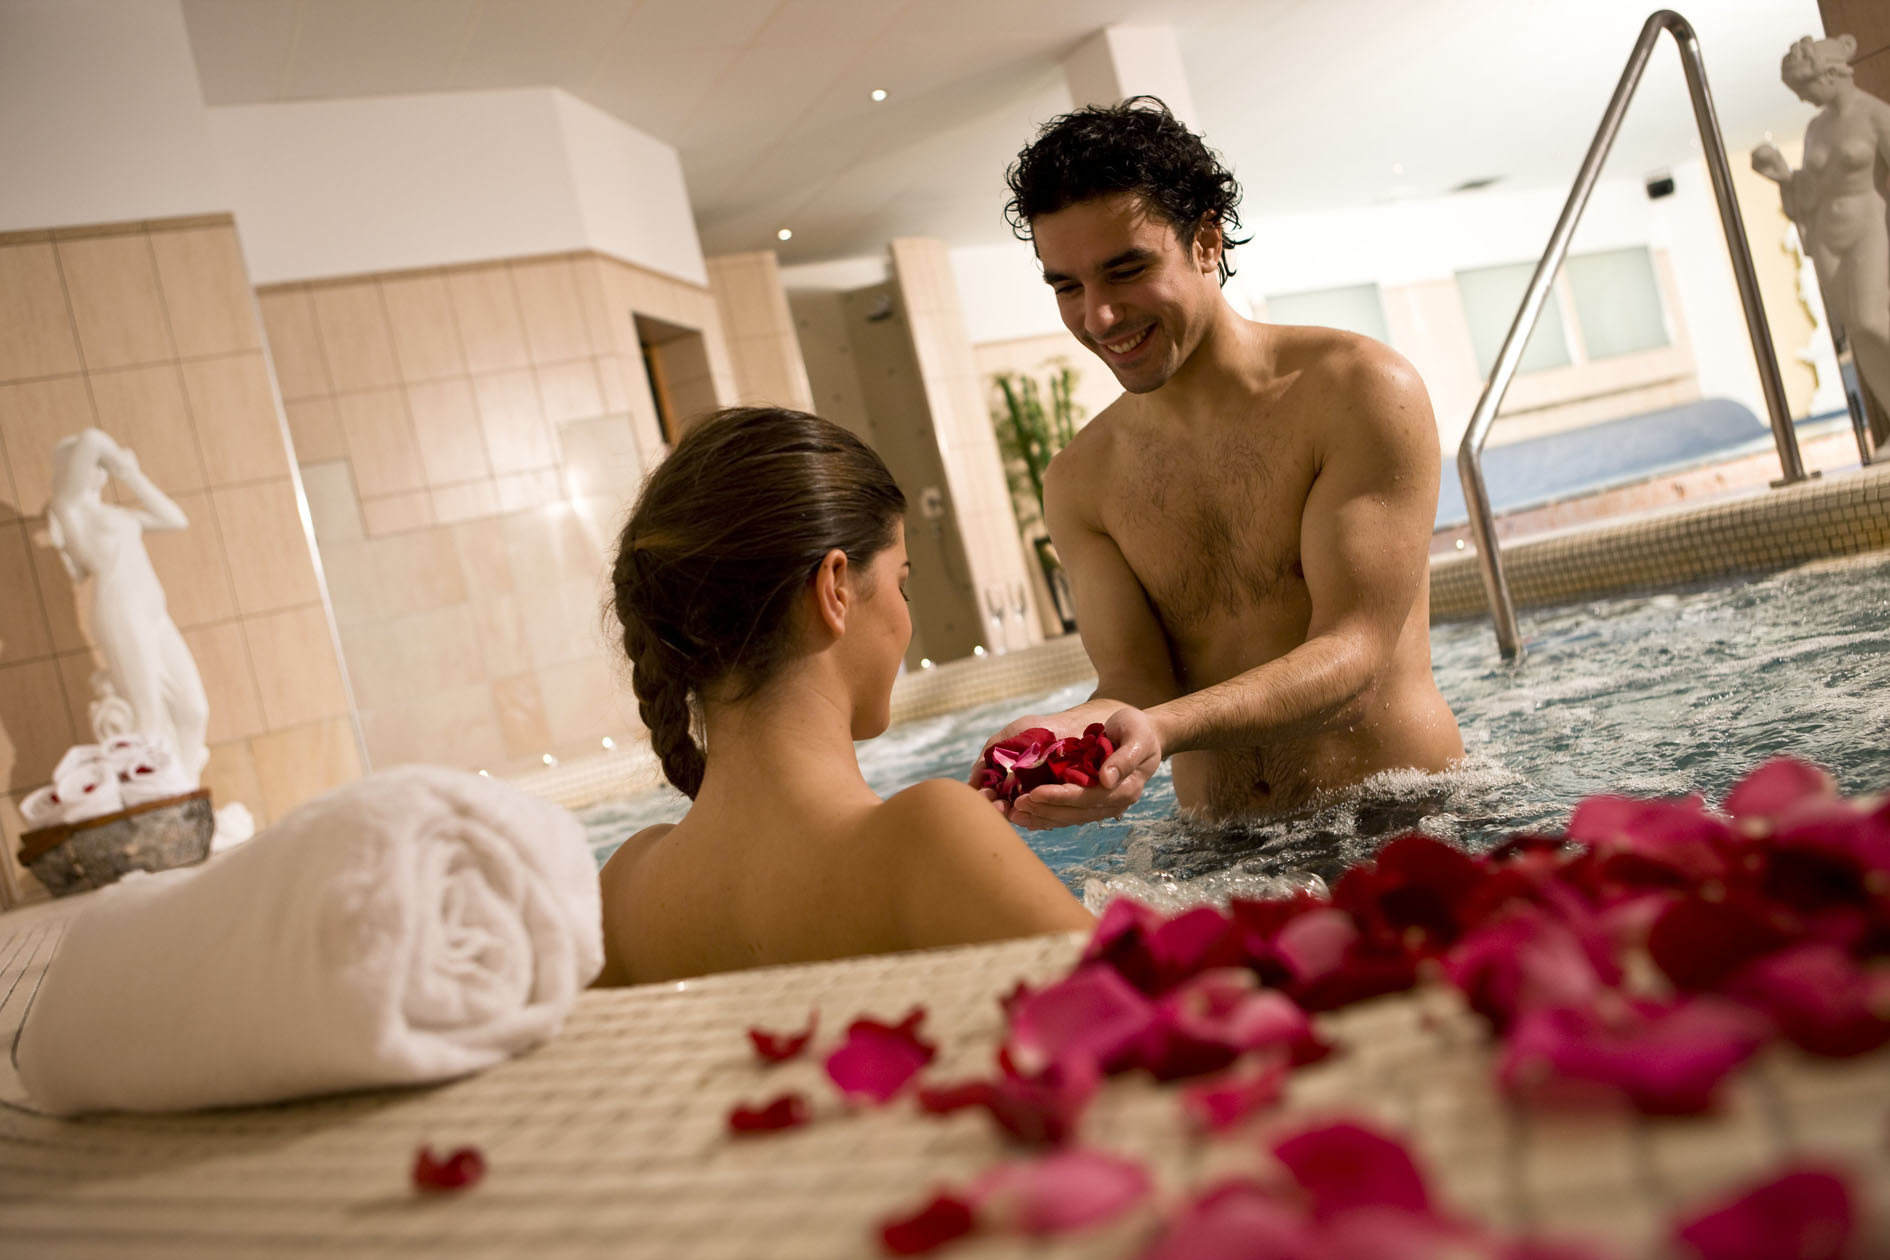 Пока жена в ванной муж. Романтика в ванной. Удовольствие в ванной. Мужчина в романтической ванной. Романтик в ванне.